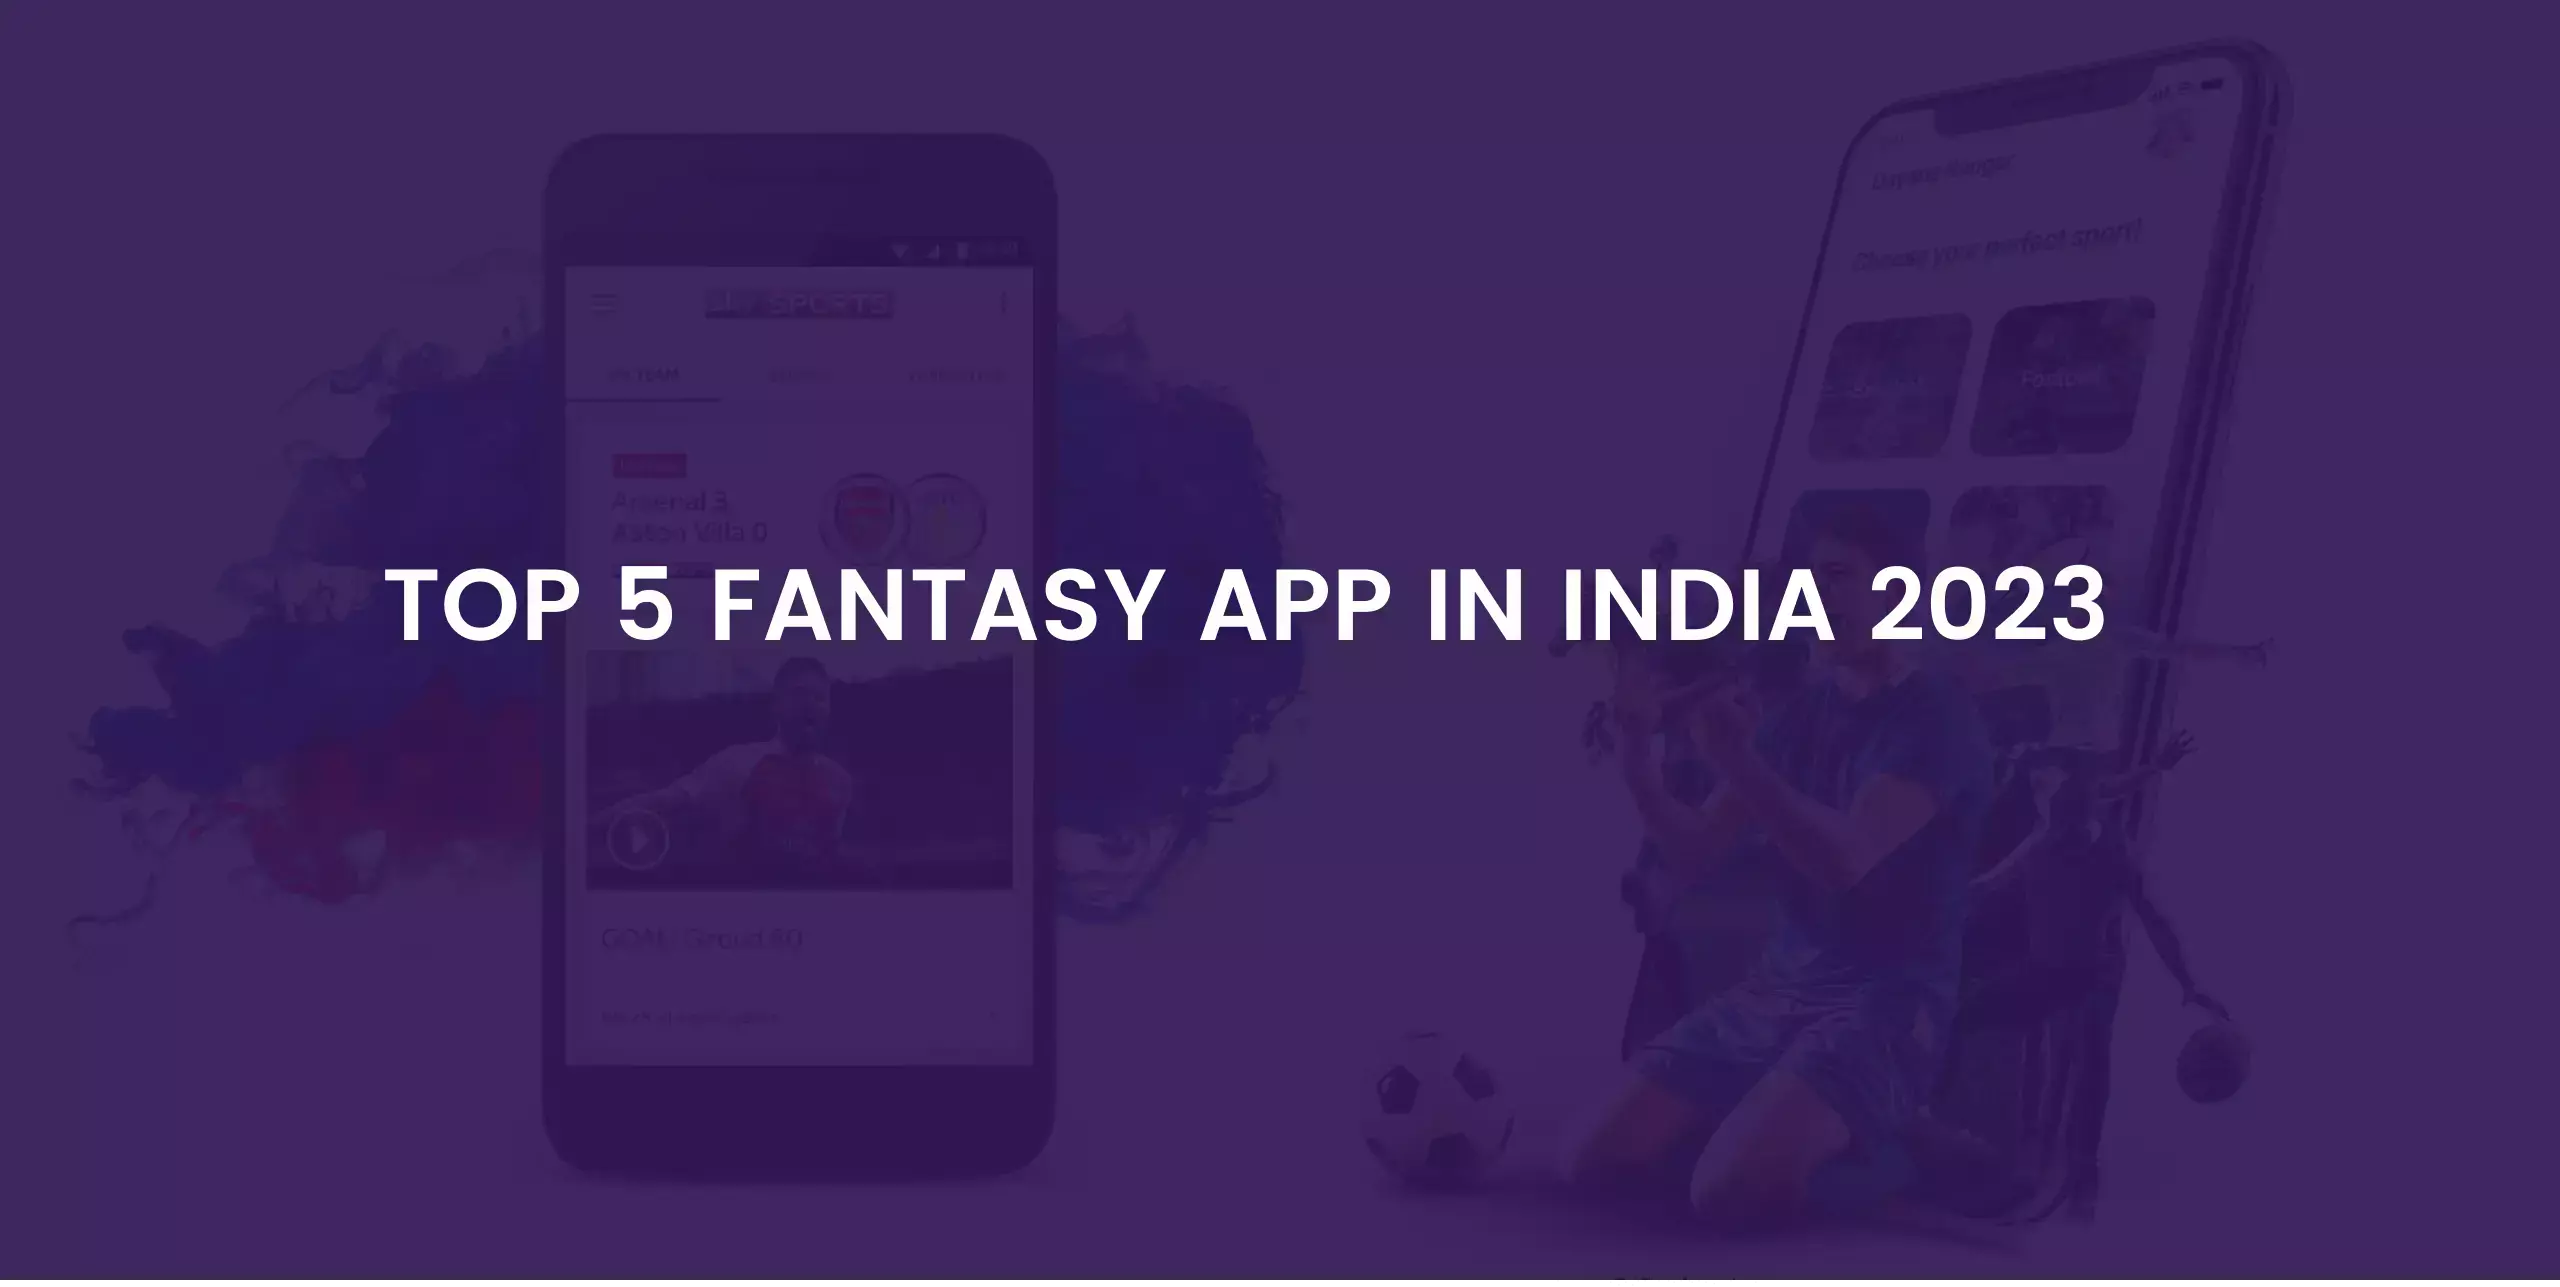 Top 2 fantasy aps in India 2023